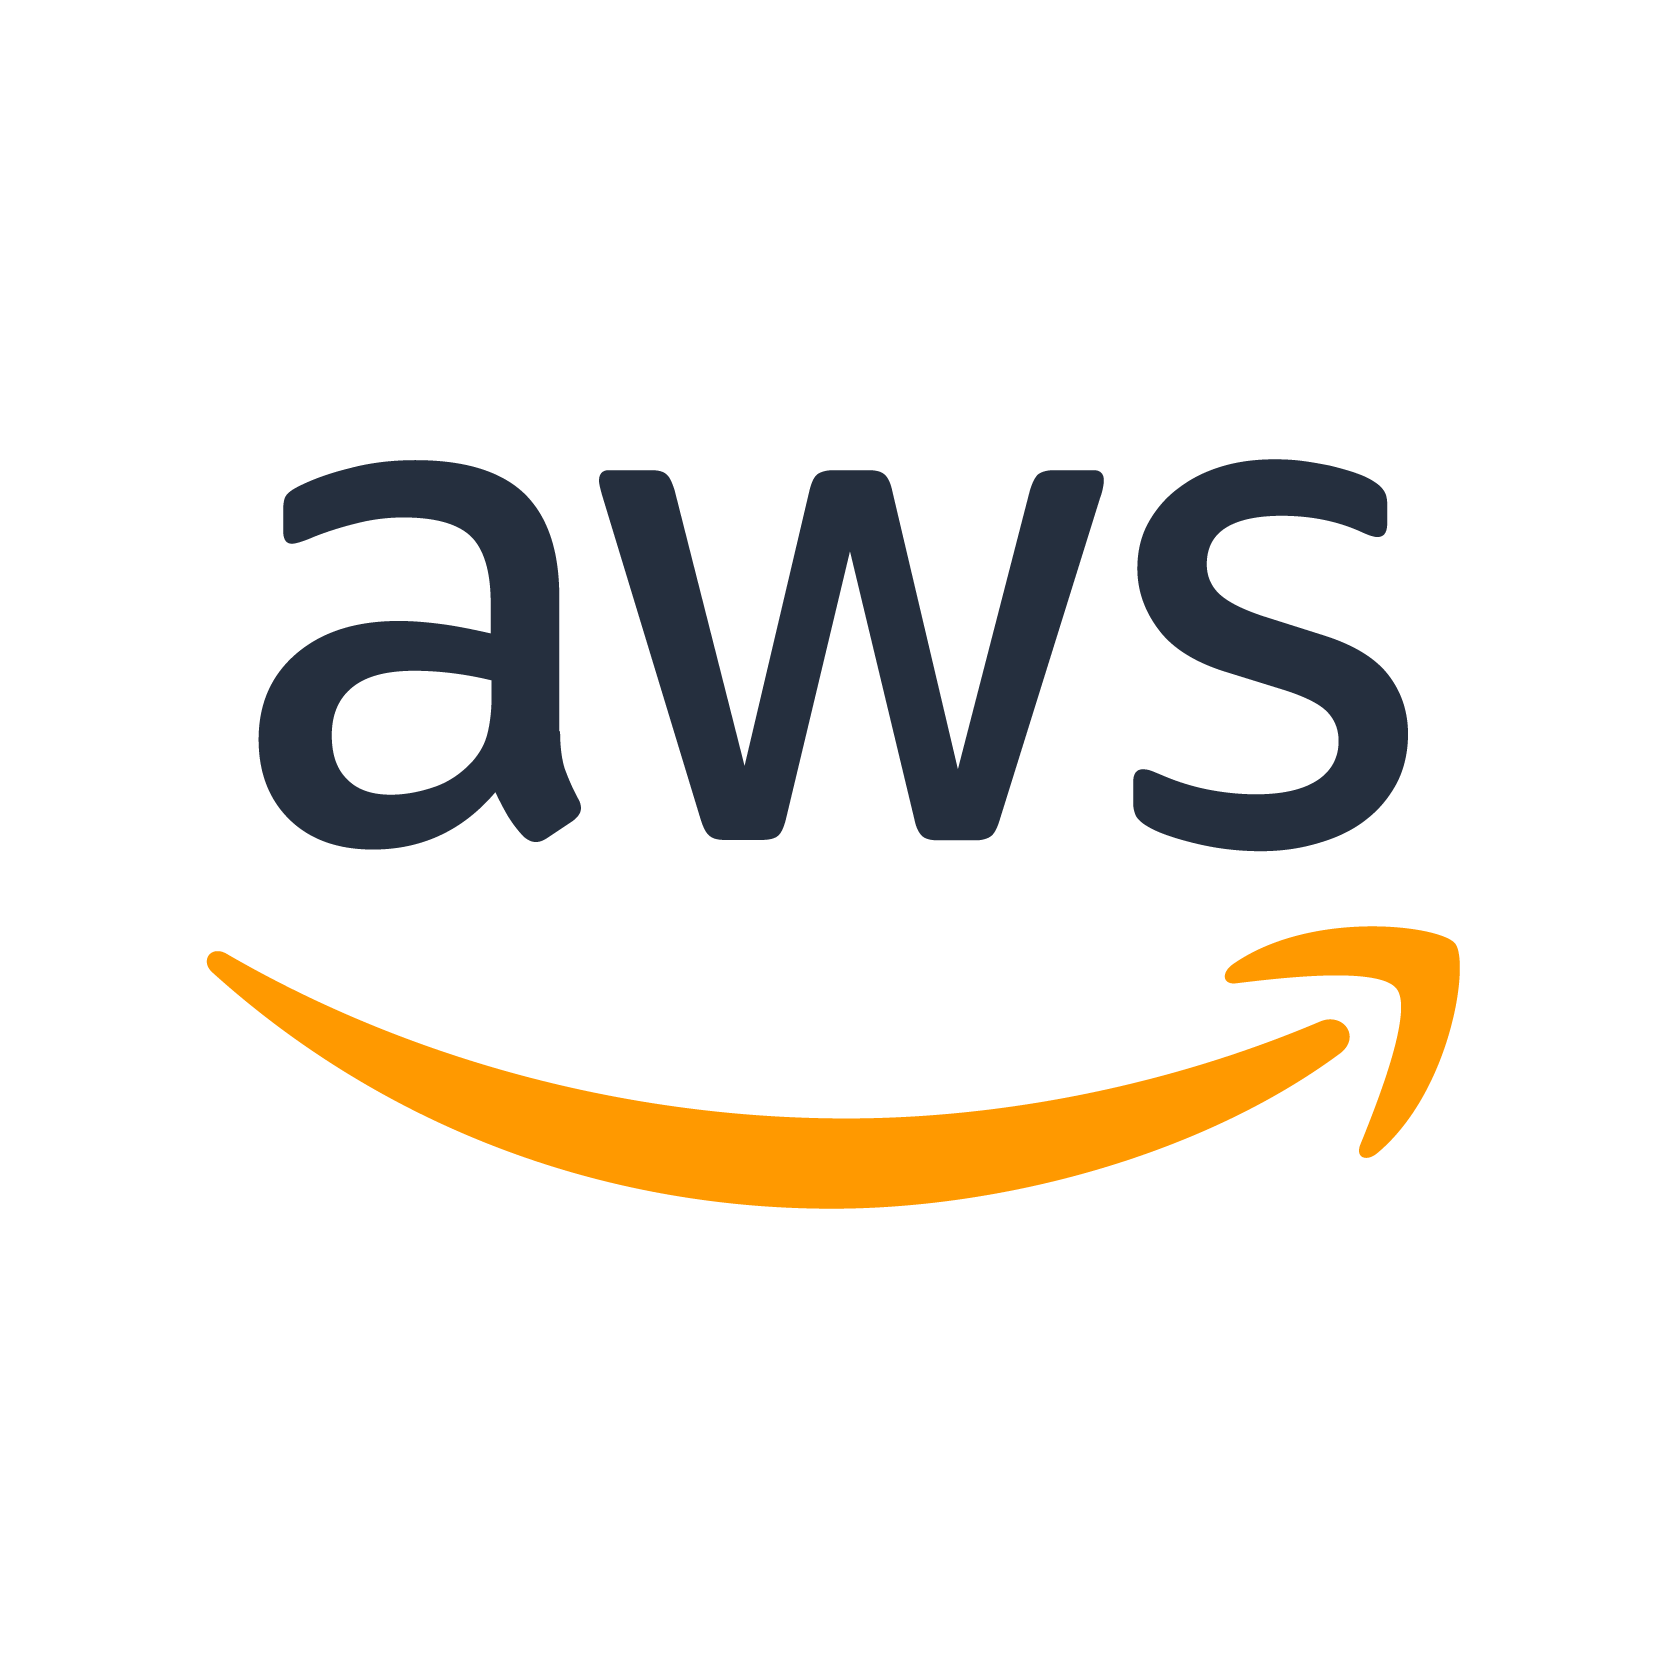 aws-logo